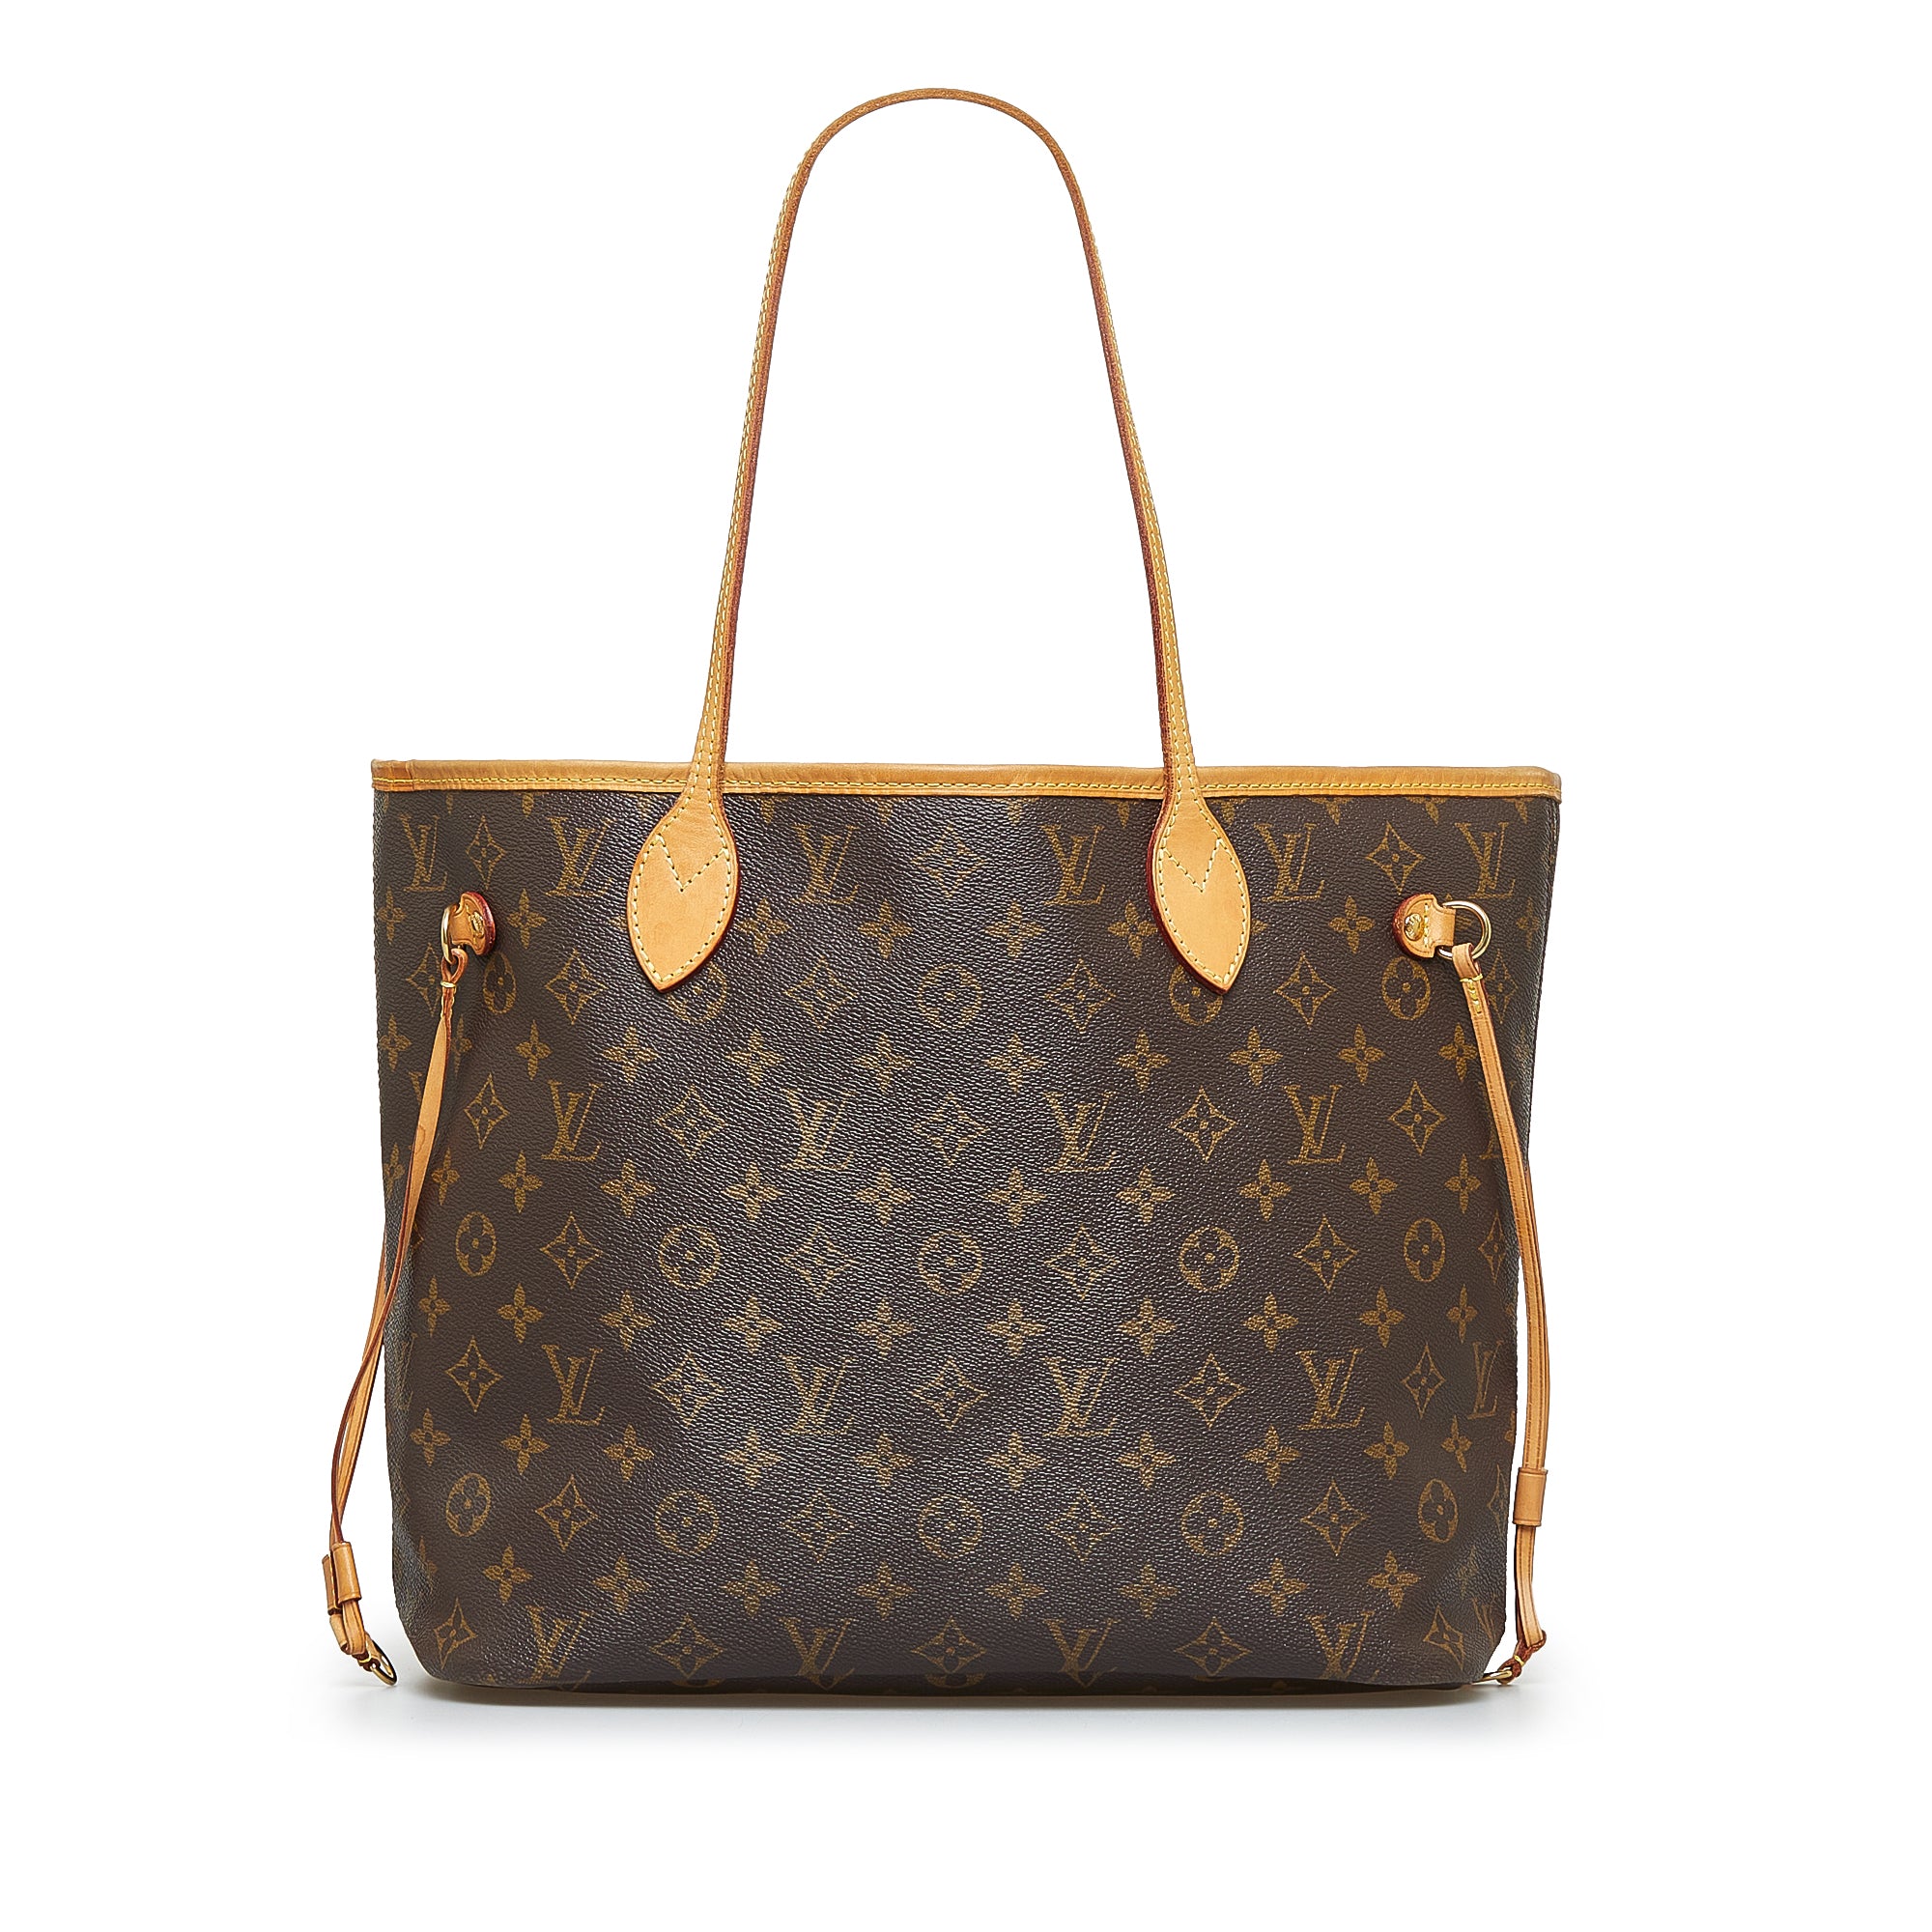 Louis Vuitton Paris handbag